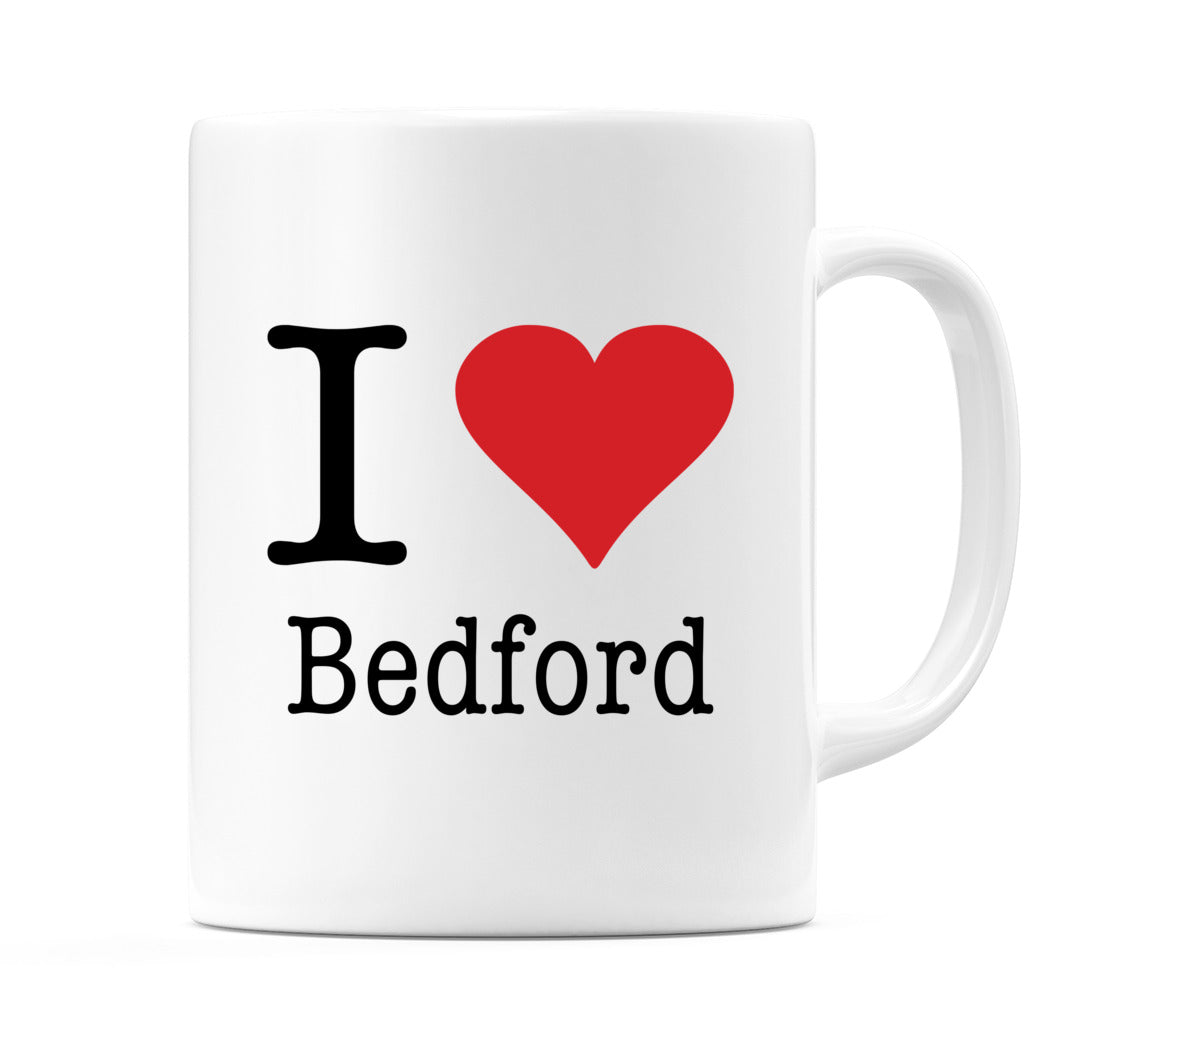 I Love Bedford Mug